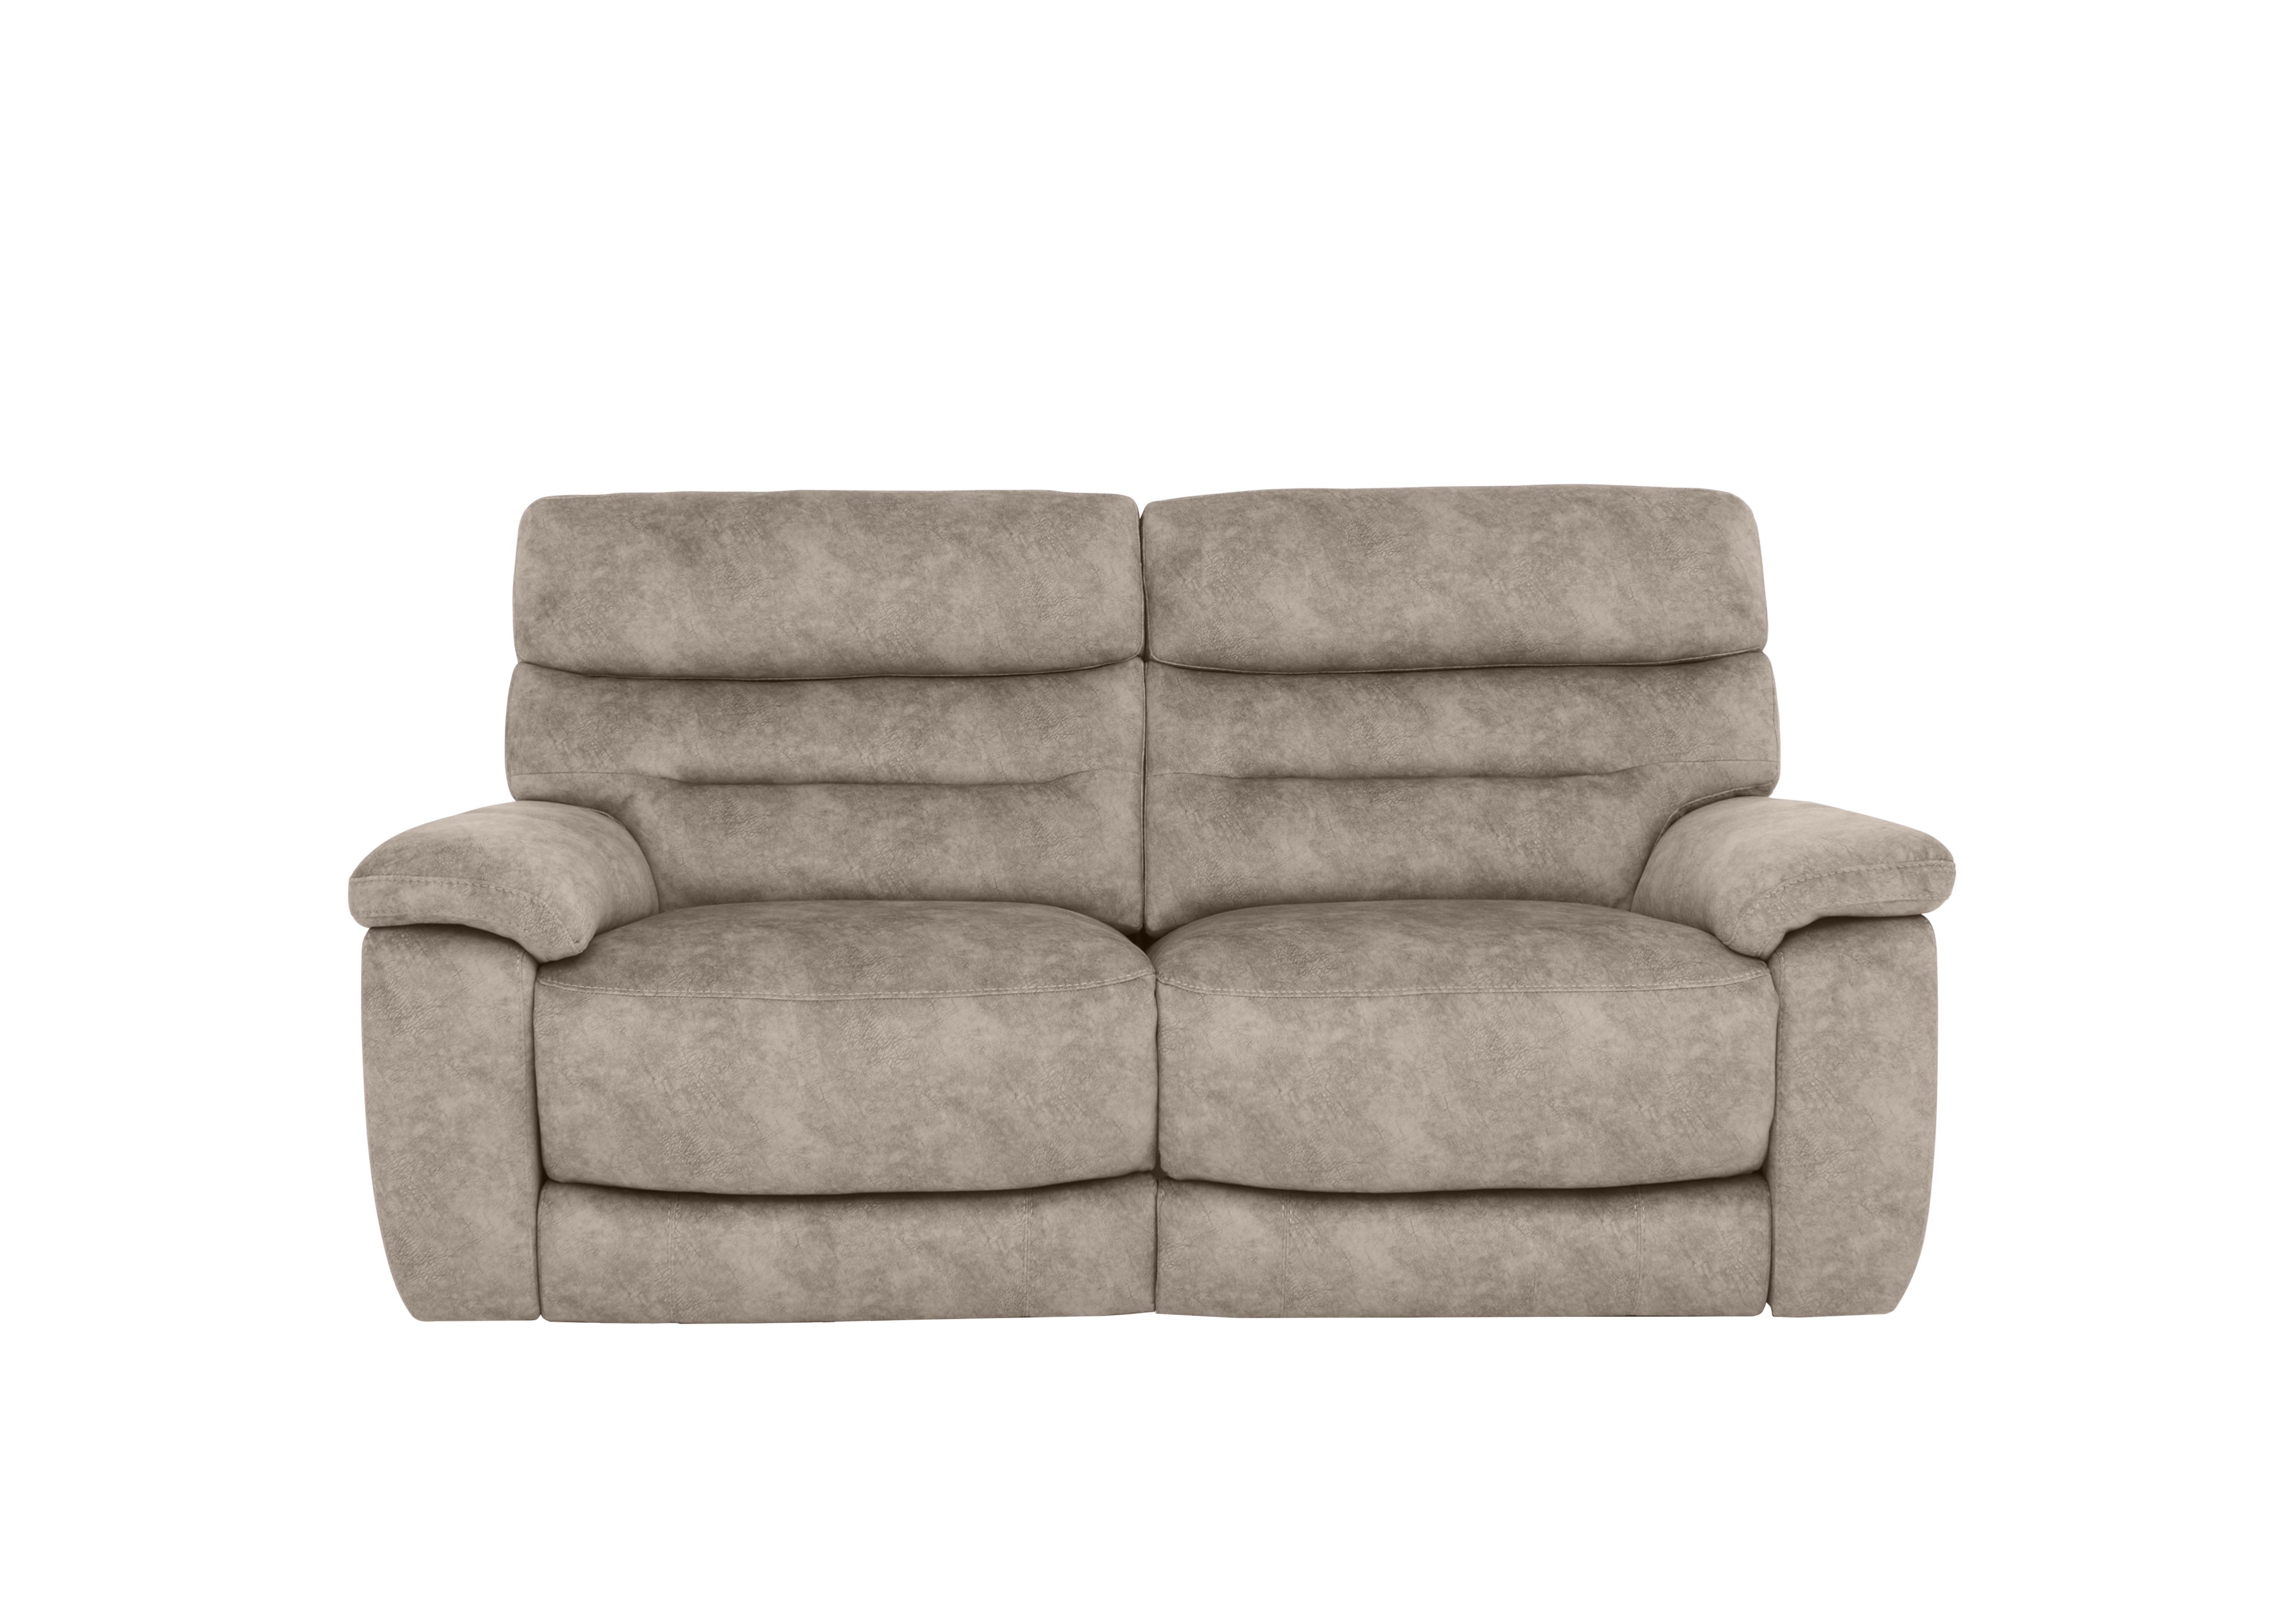 Nimbus 2 Seater Fabric Sofa in Bfa-Bnn-R29 Mink on Furniture Village